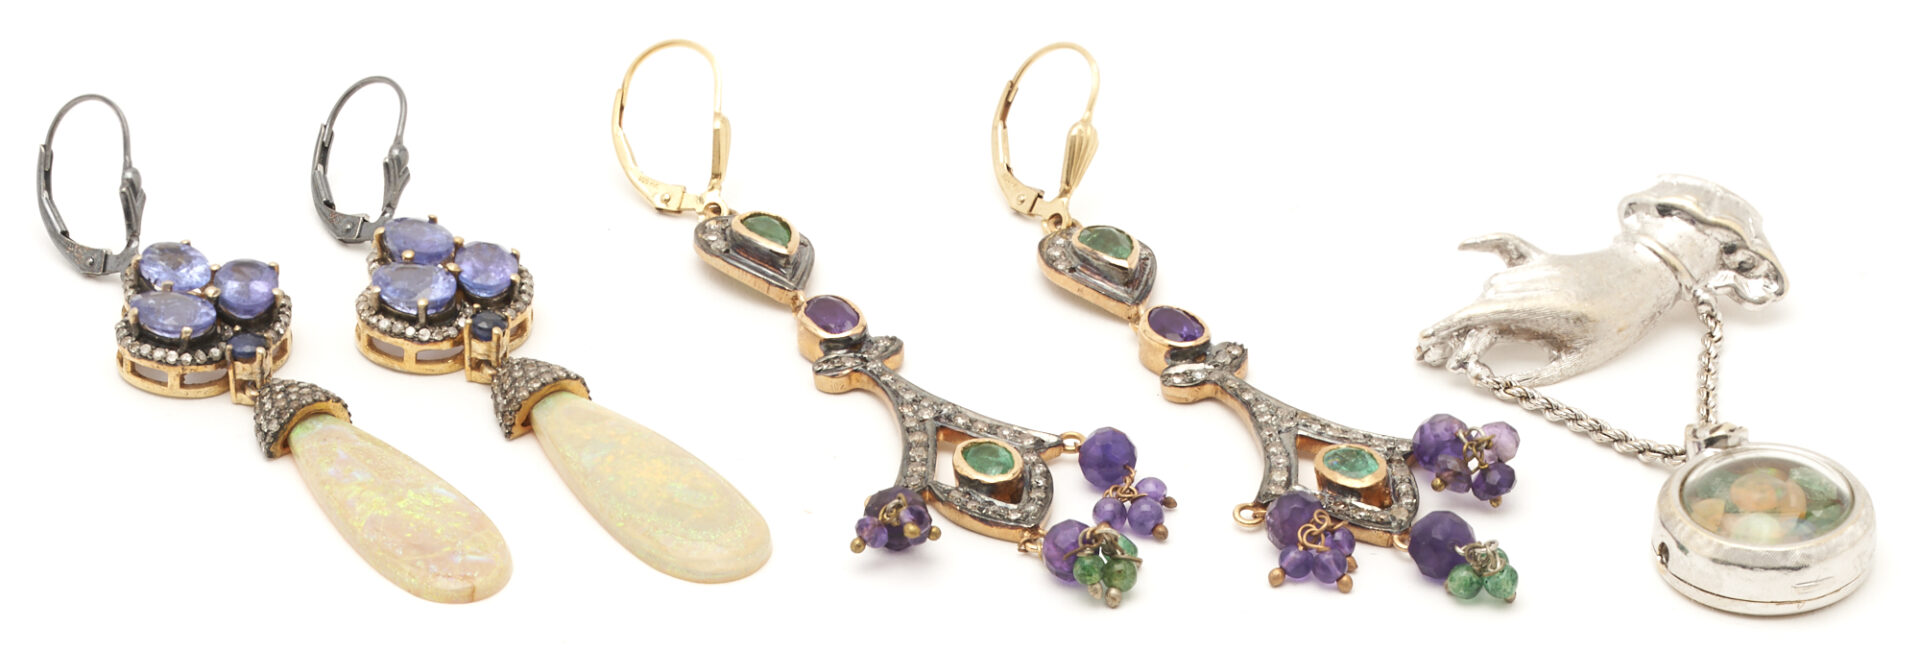 Lot 751: 4 Ladies’ Vintage Jewelry Items: 14K Brooch, Art Deco Bracelet & Earrings